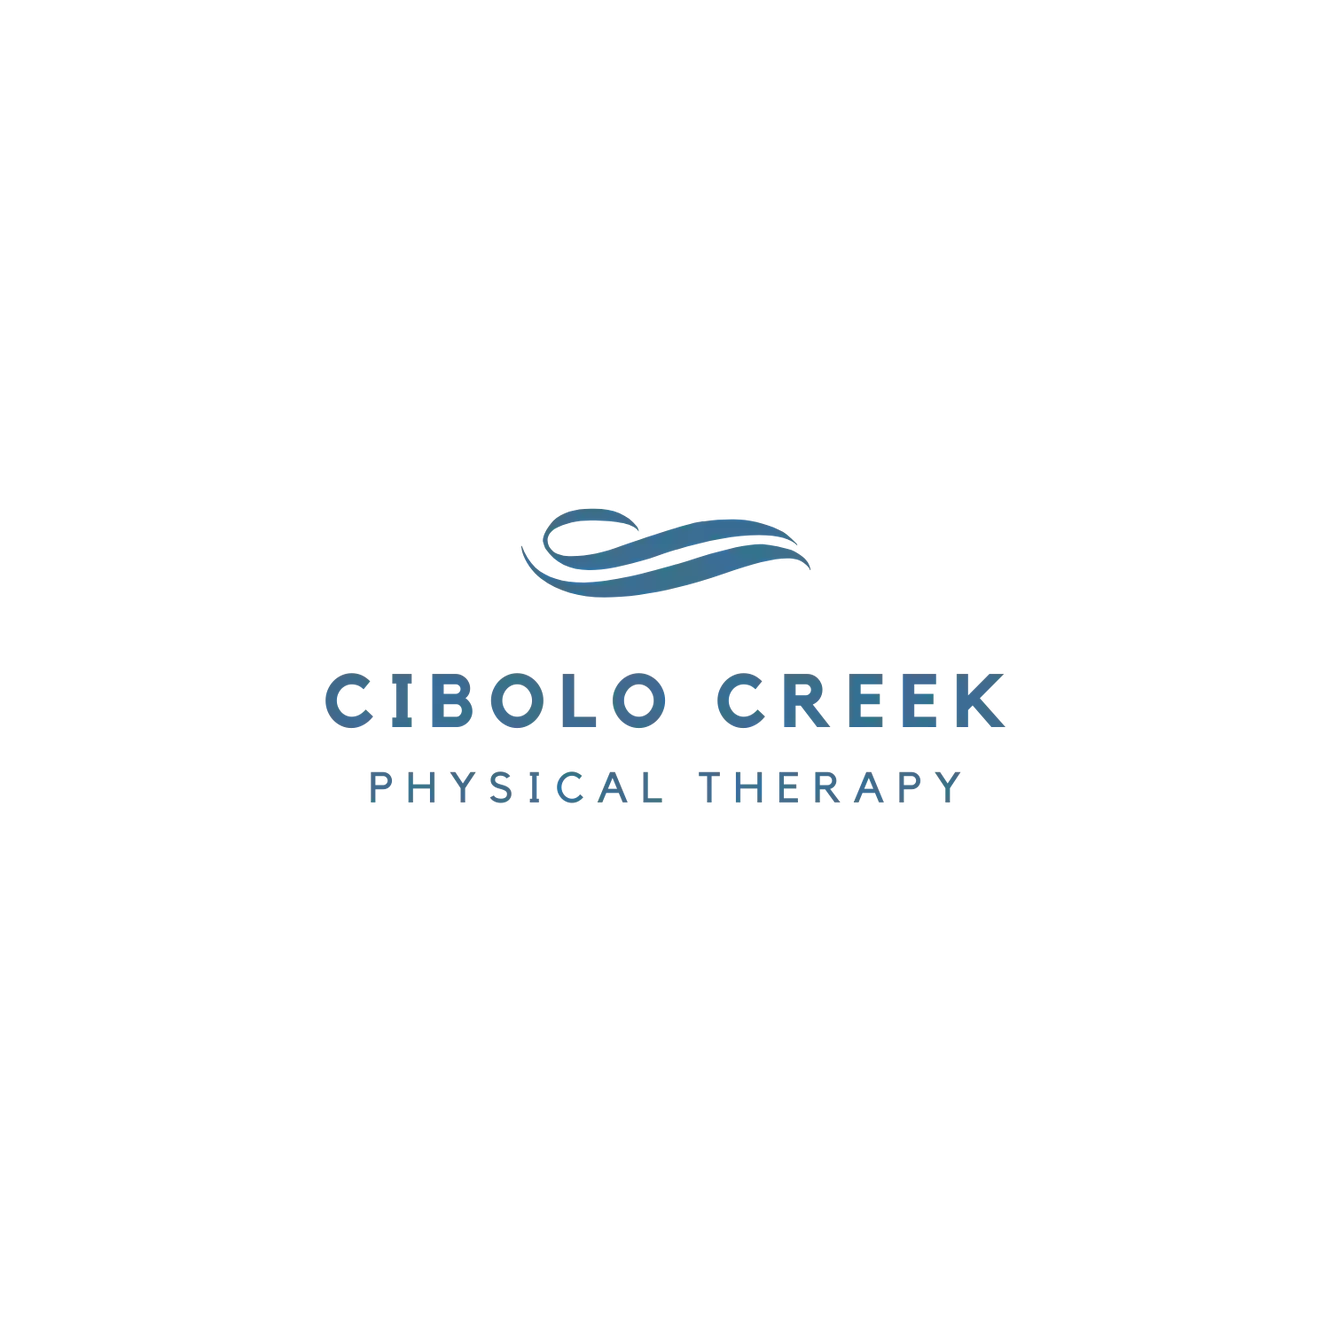 Cibolo Creek Physical Therapy